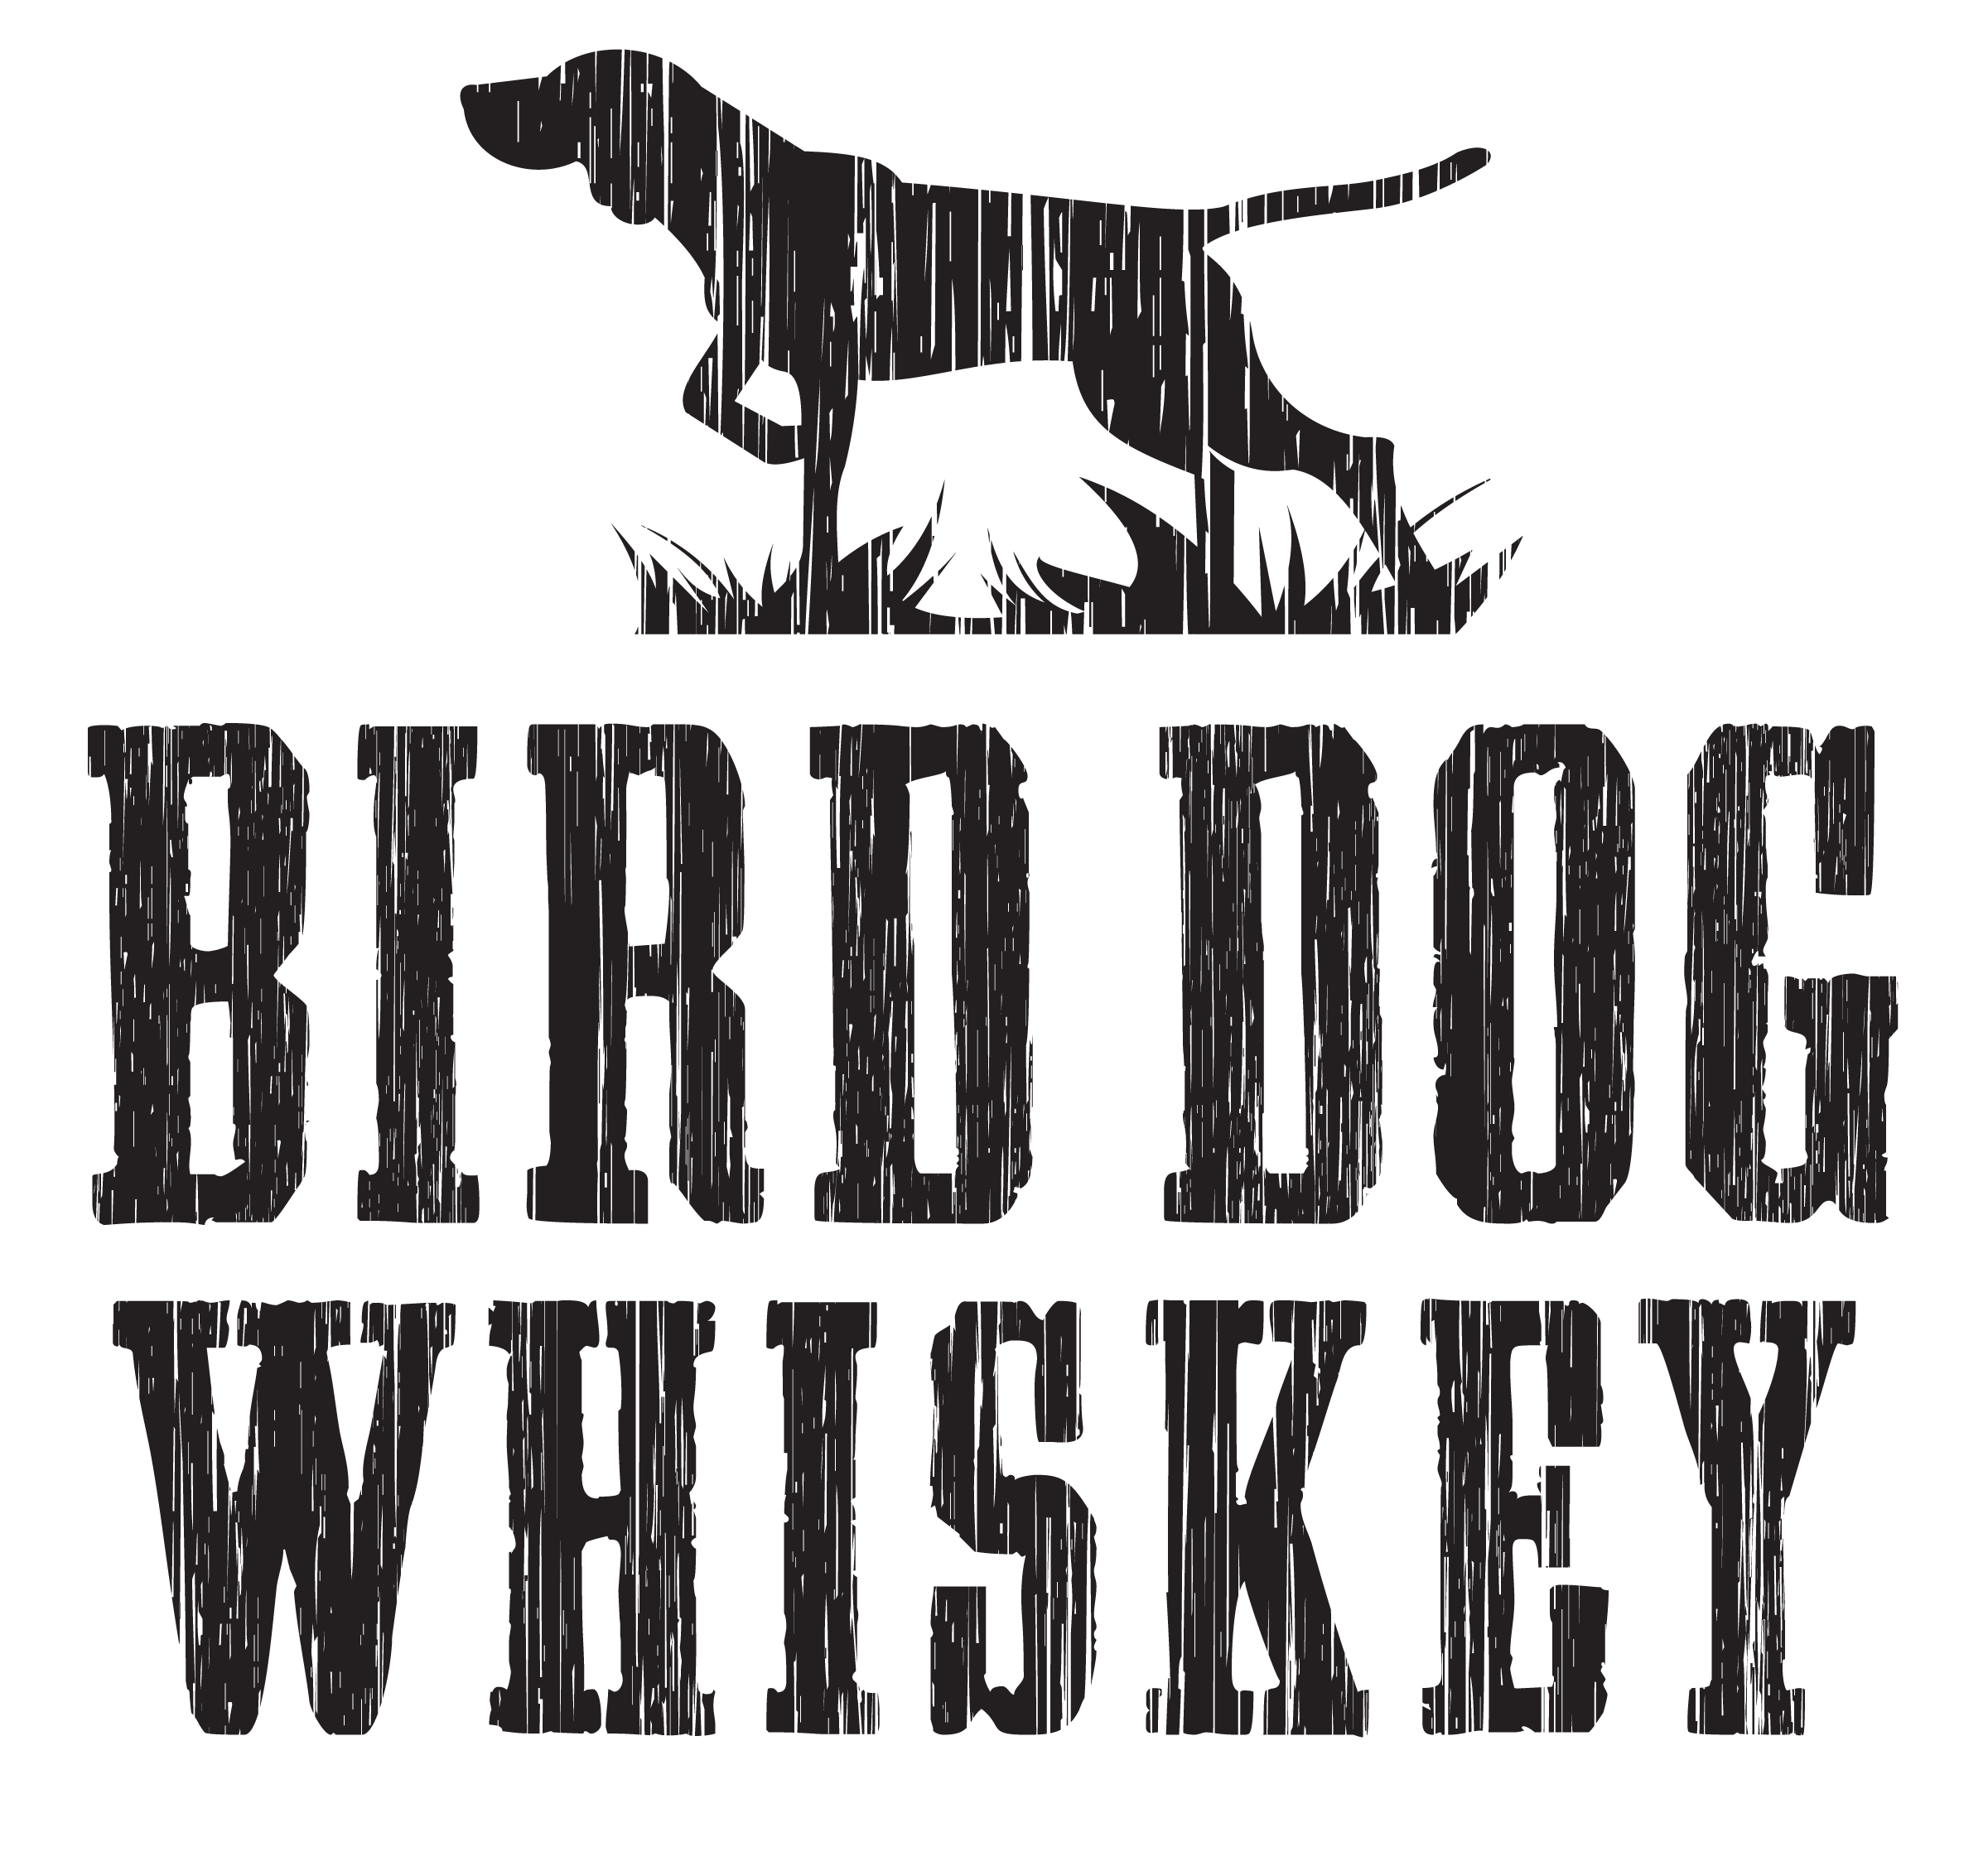 Bird Dog Whiskey – Big Thirst